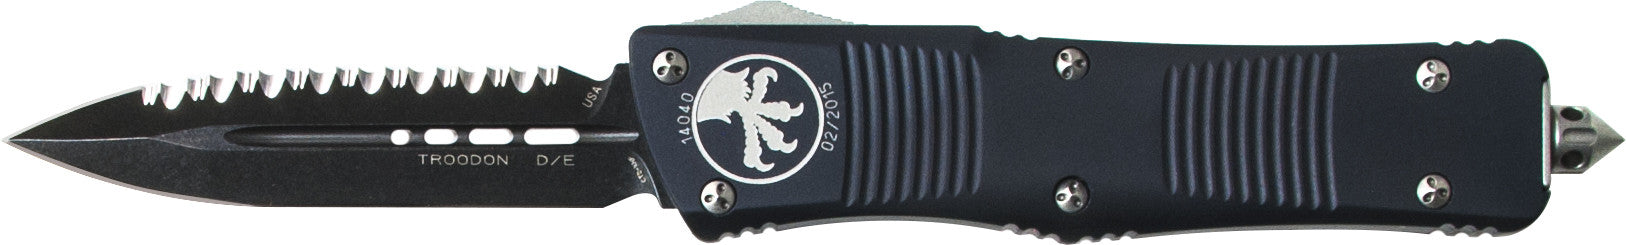 Microtech Troodon D/E OTF Automatic Knife (3" Black Full Serr) 138-3 - GearBarrel.com